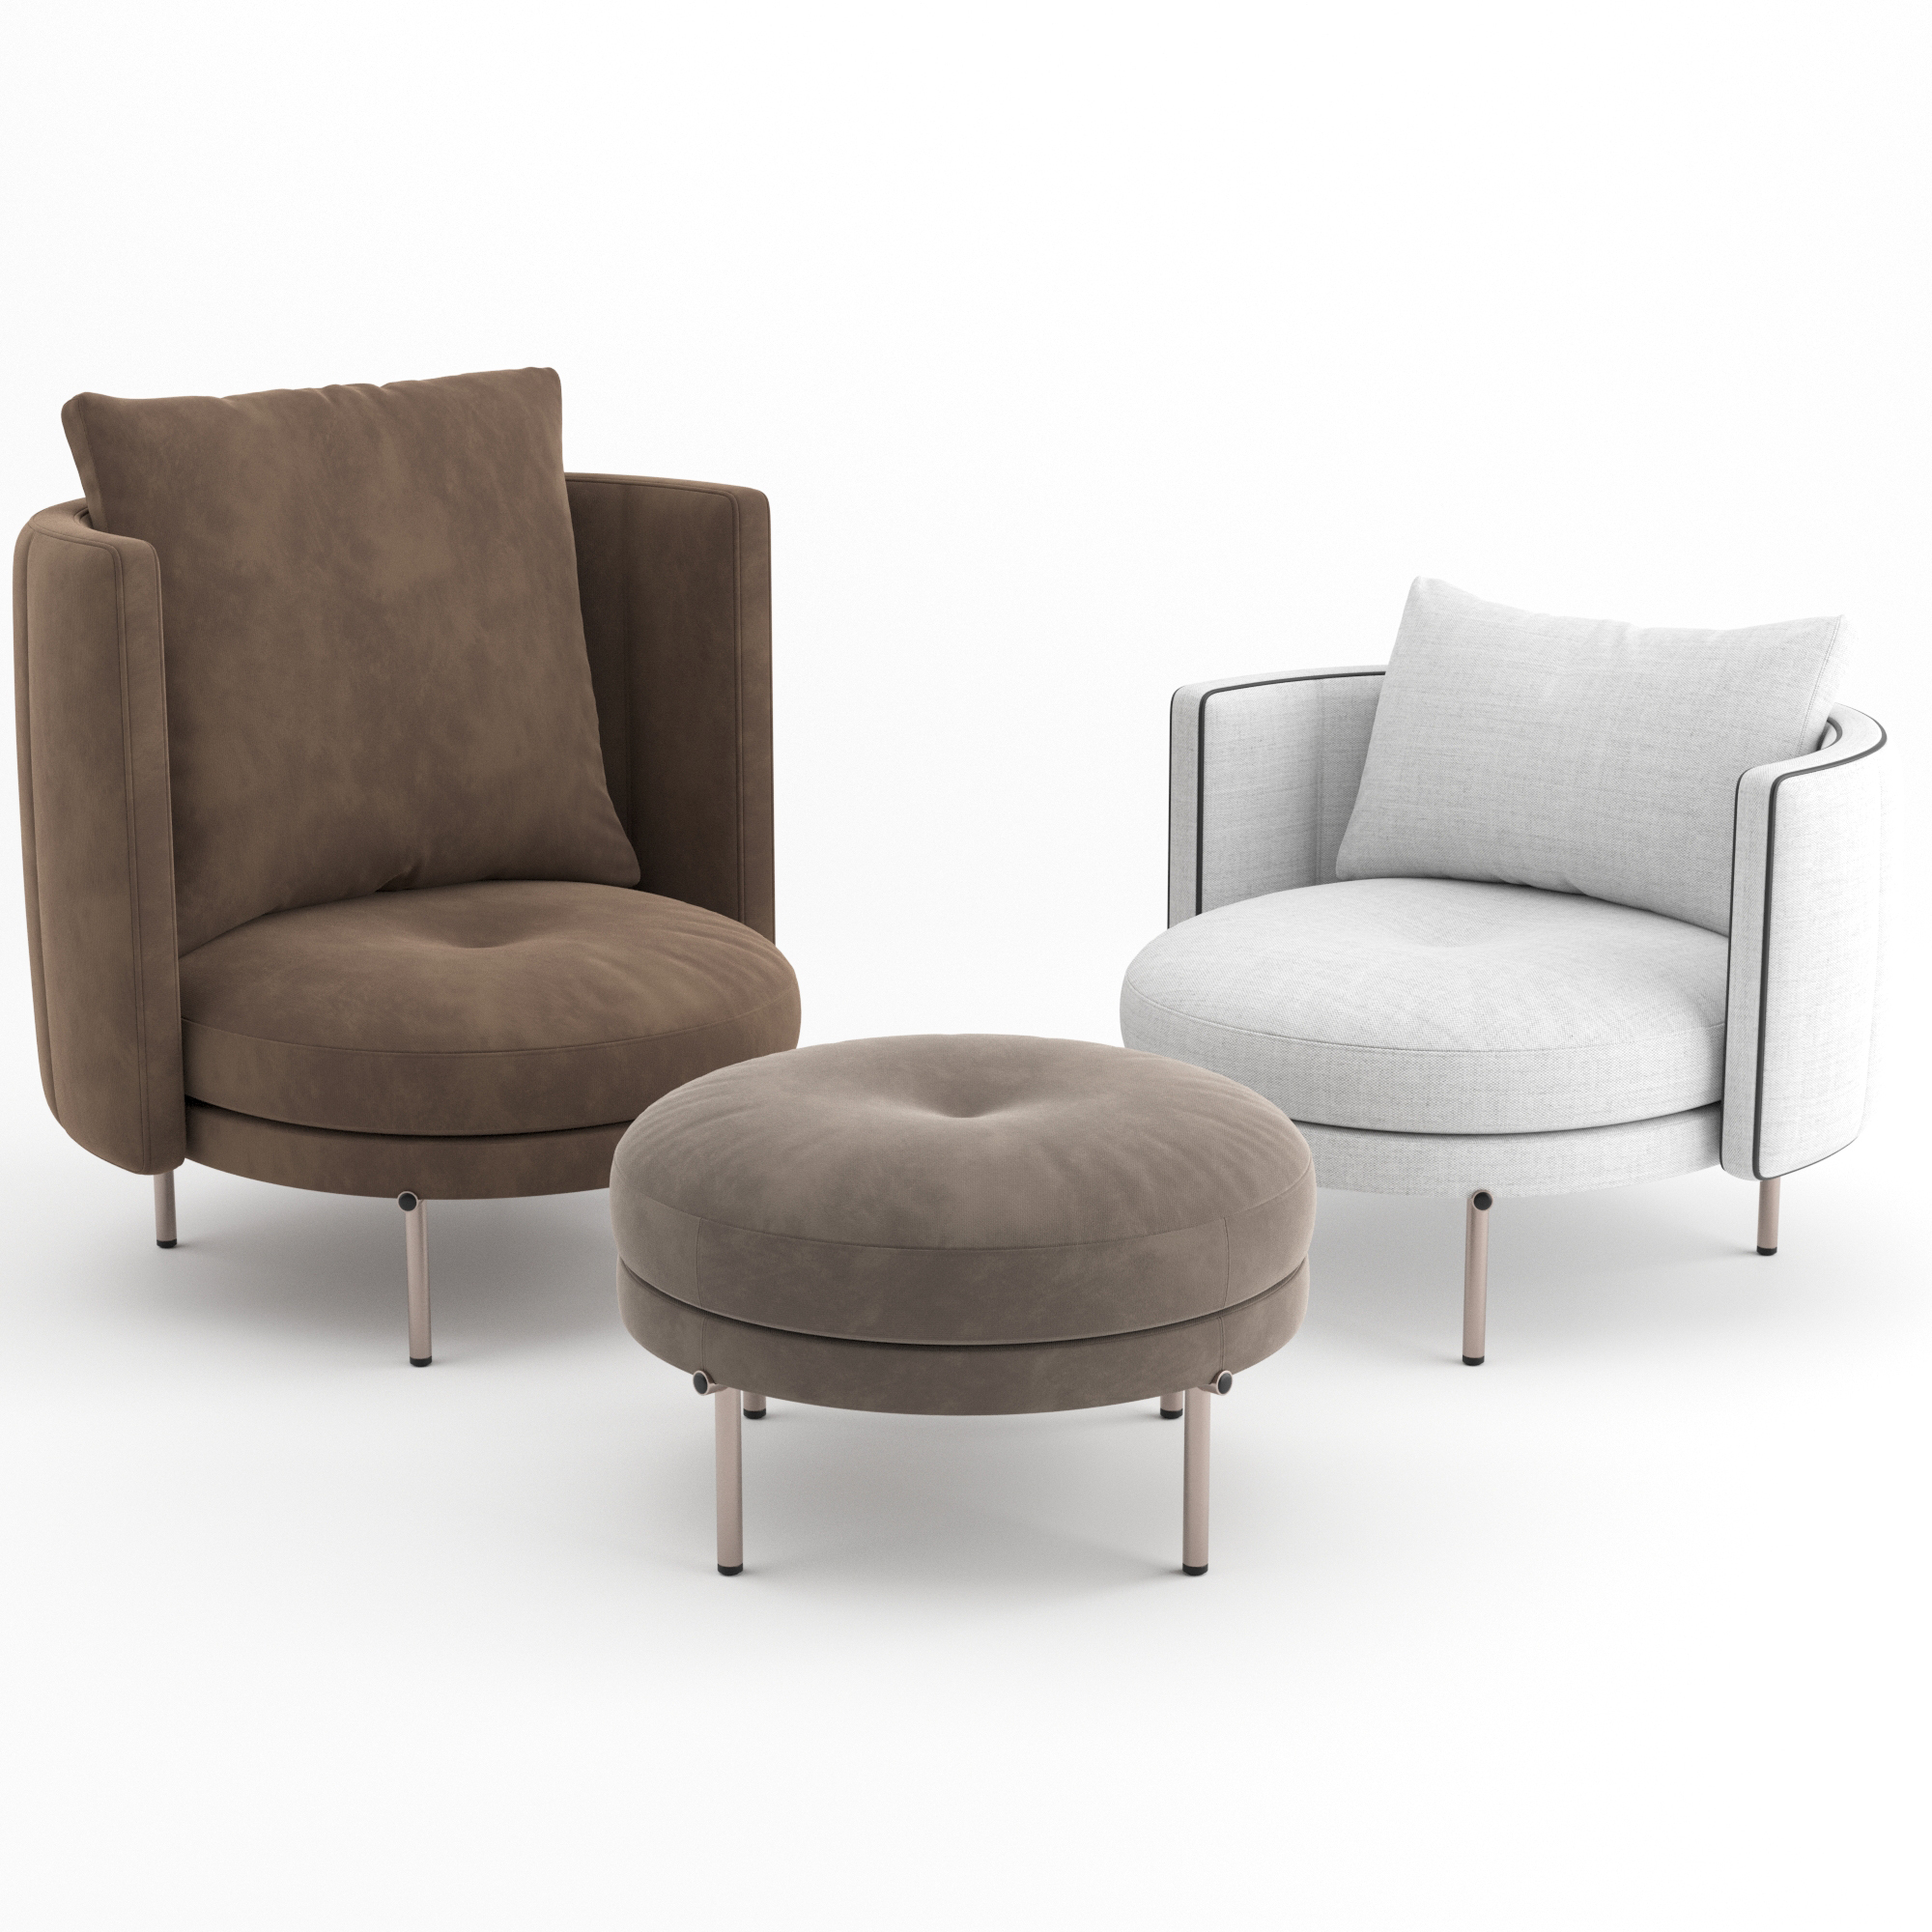 3D armchairs footstool ottoman model - TurboSquid 1604610